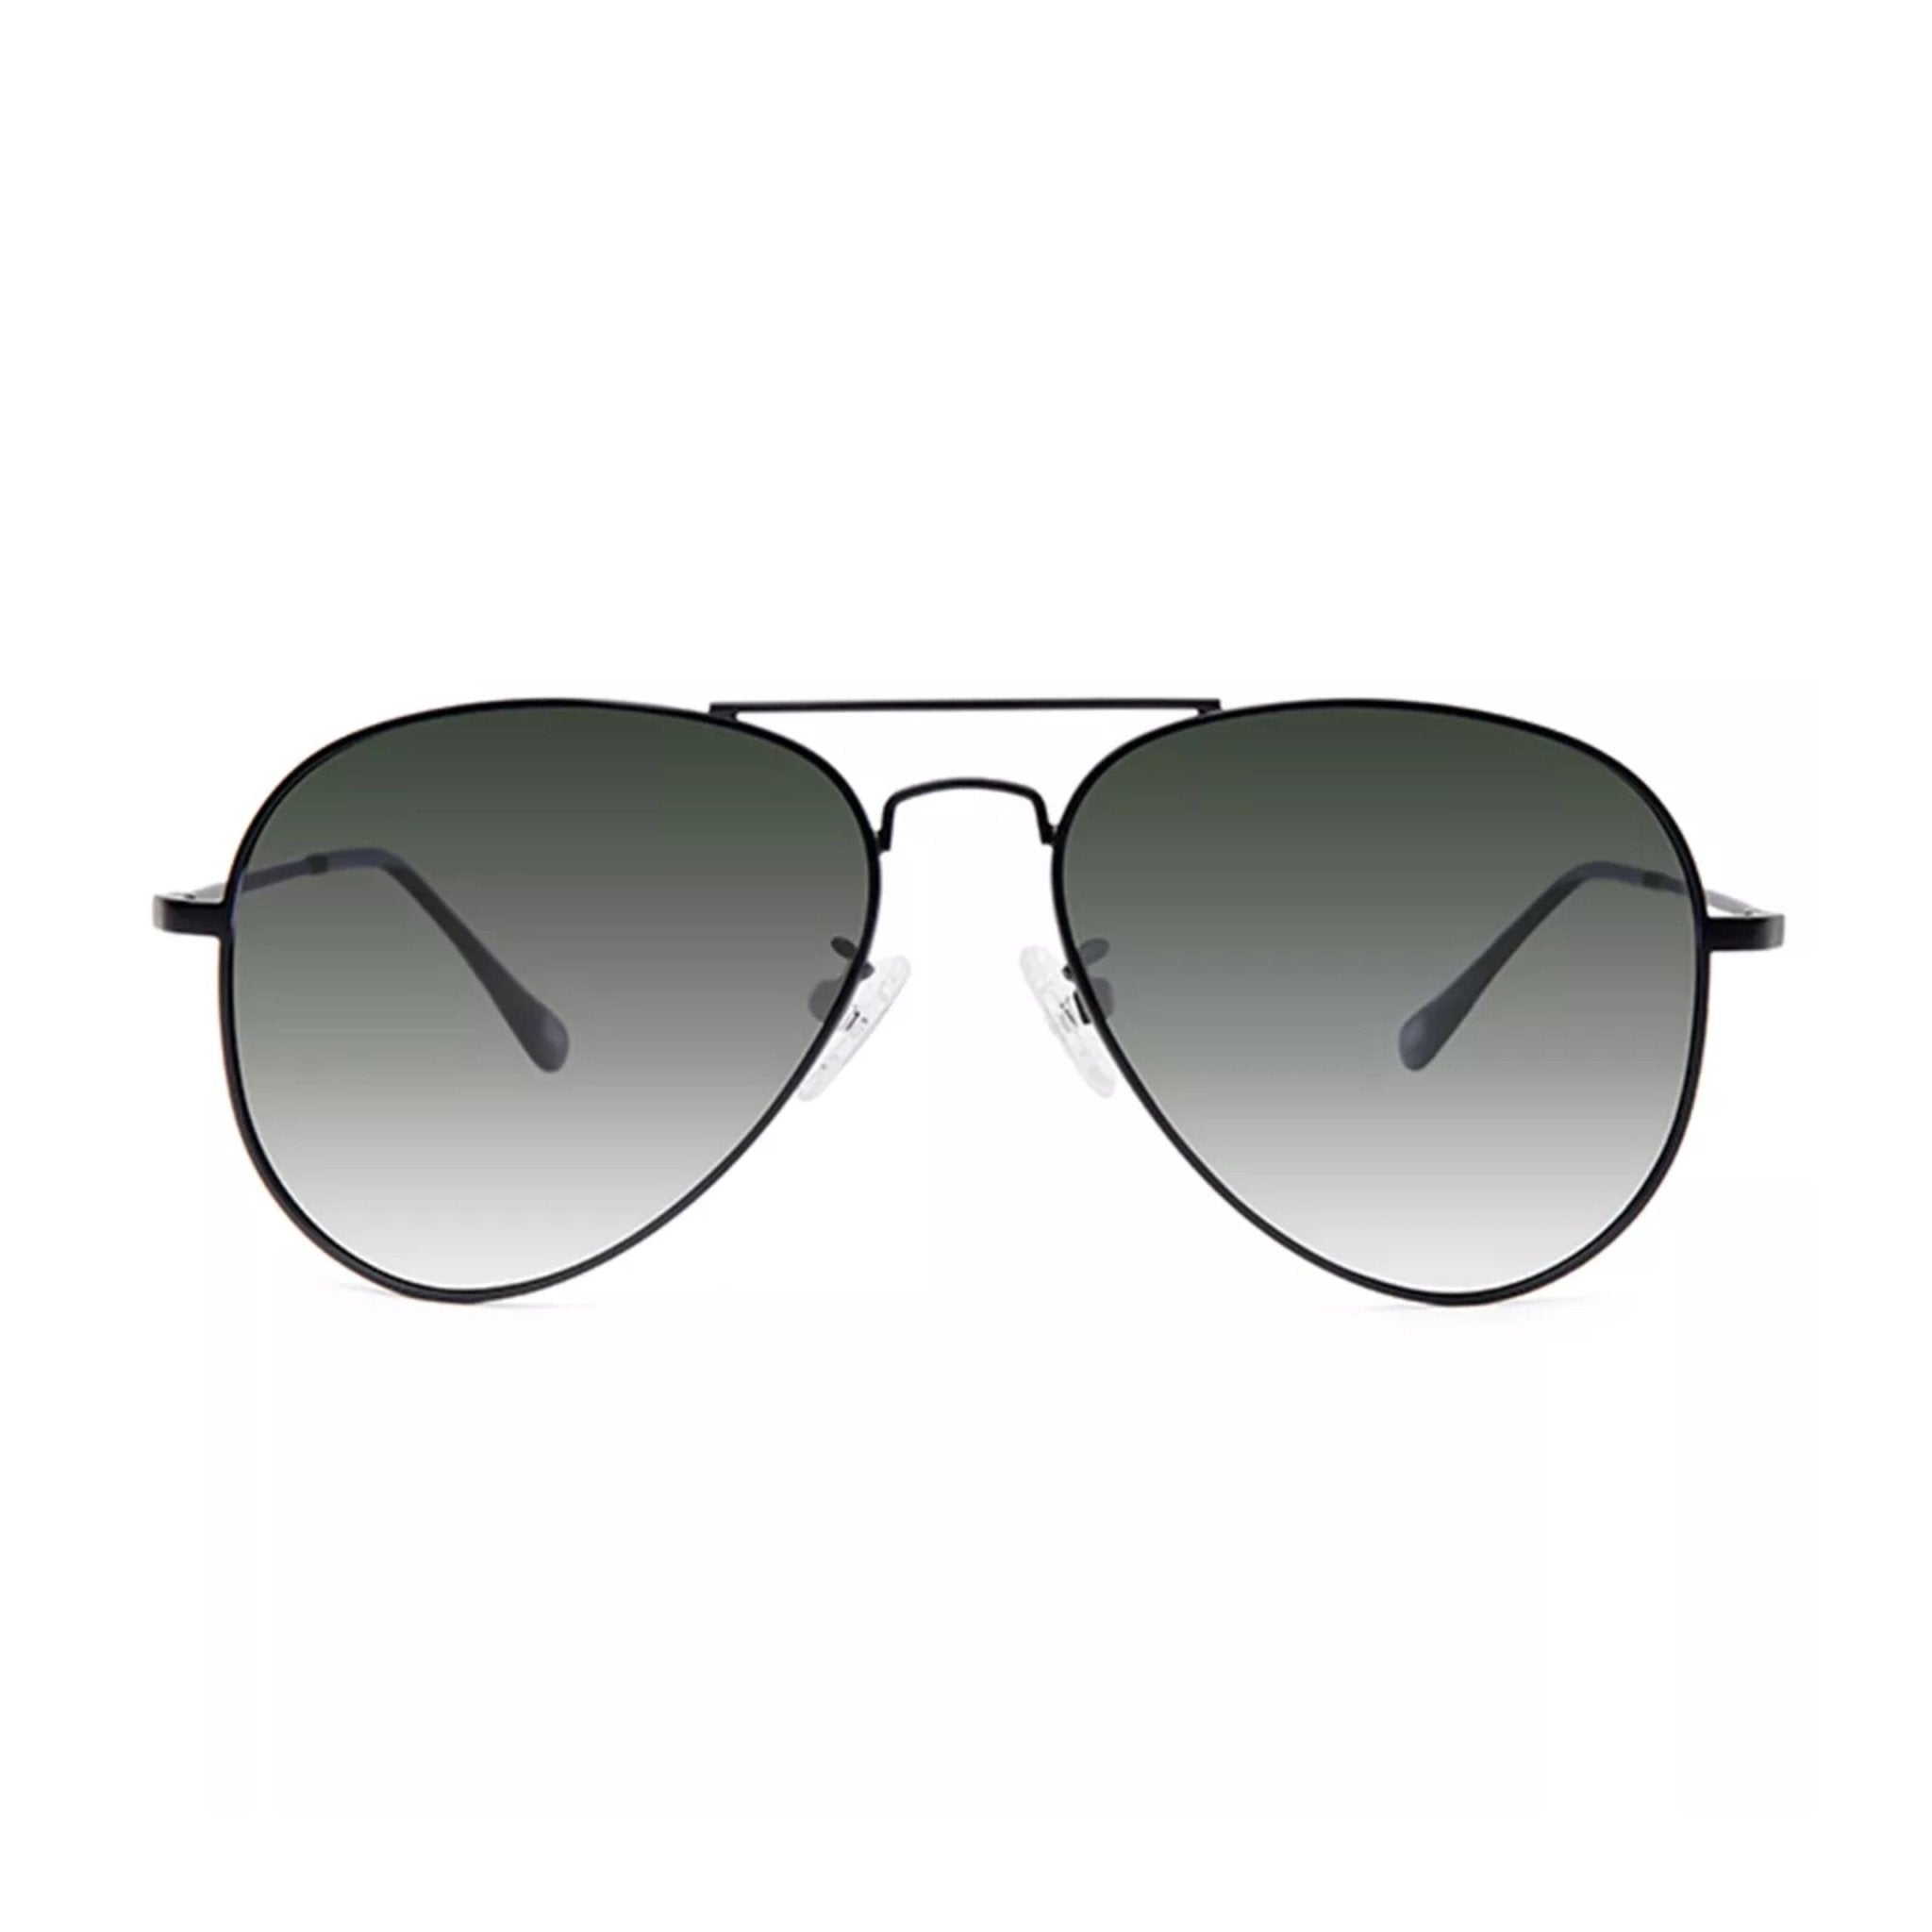 Mi Polarized Pilot Sunglasses UV 400 Protection - Green